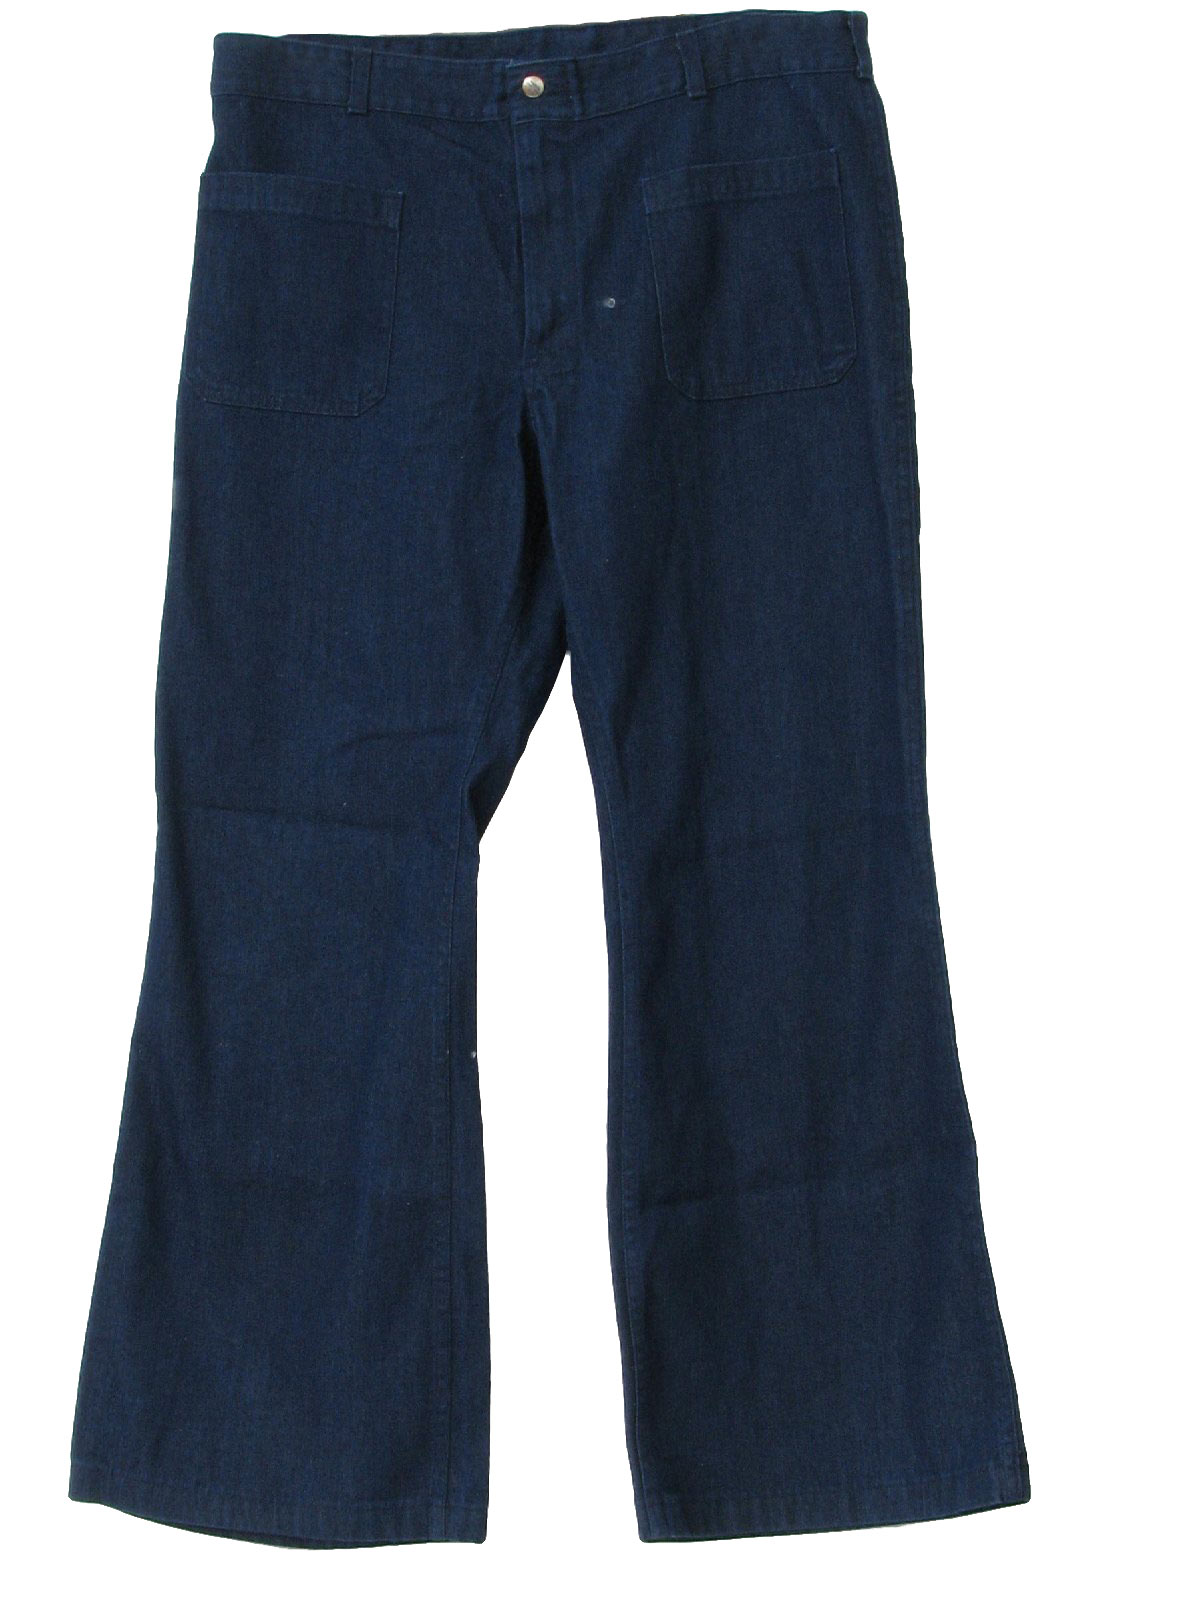 70s Bellbottom Pants (Seafarer): 70s -Seafarer- Mens blue cotton and ...